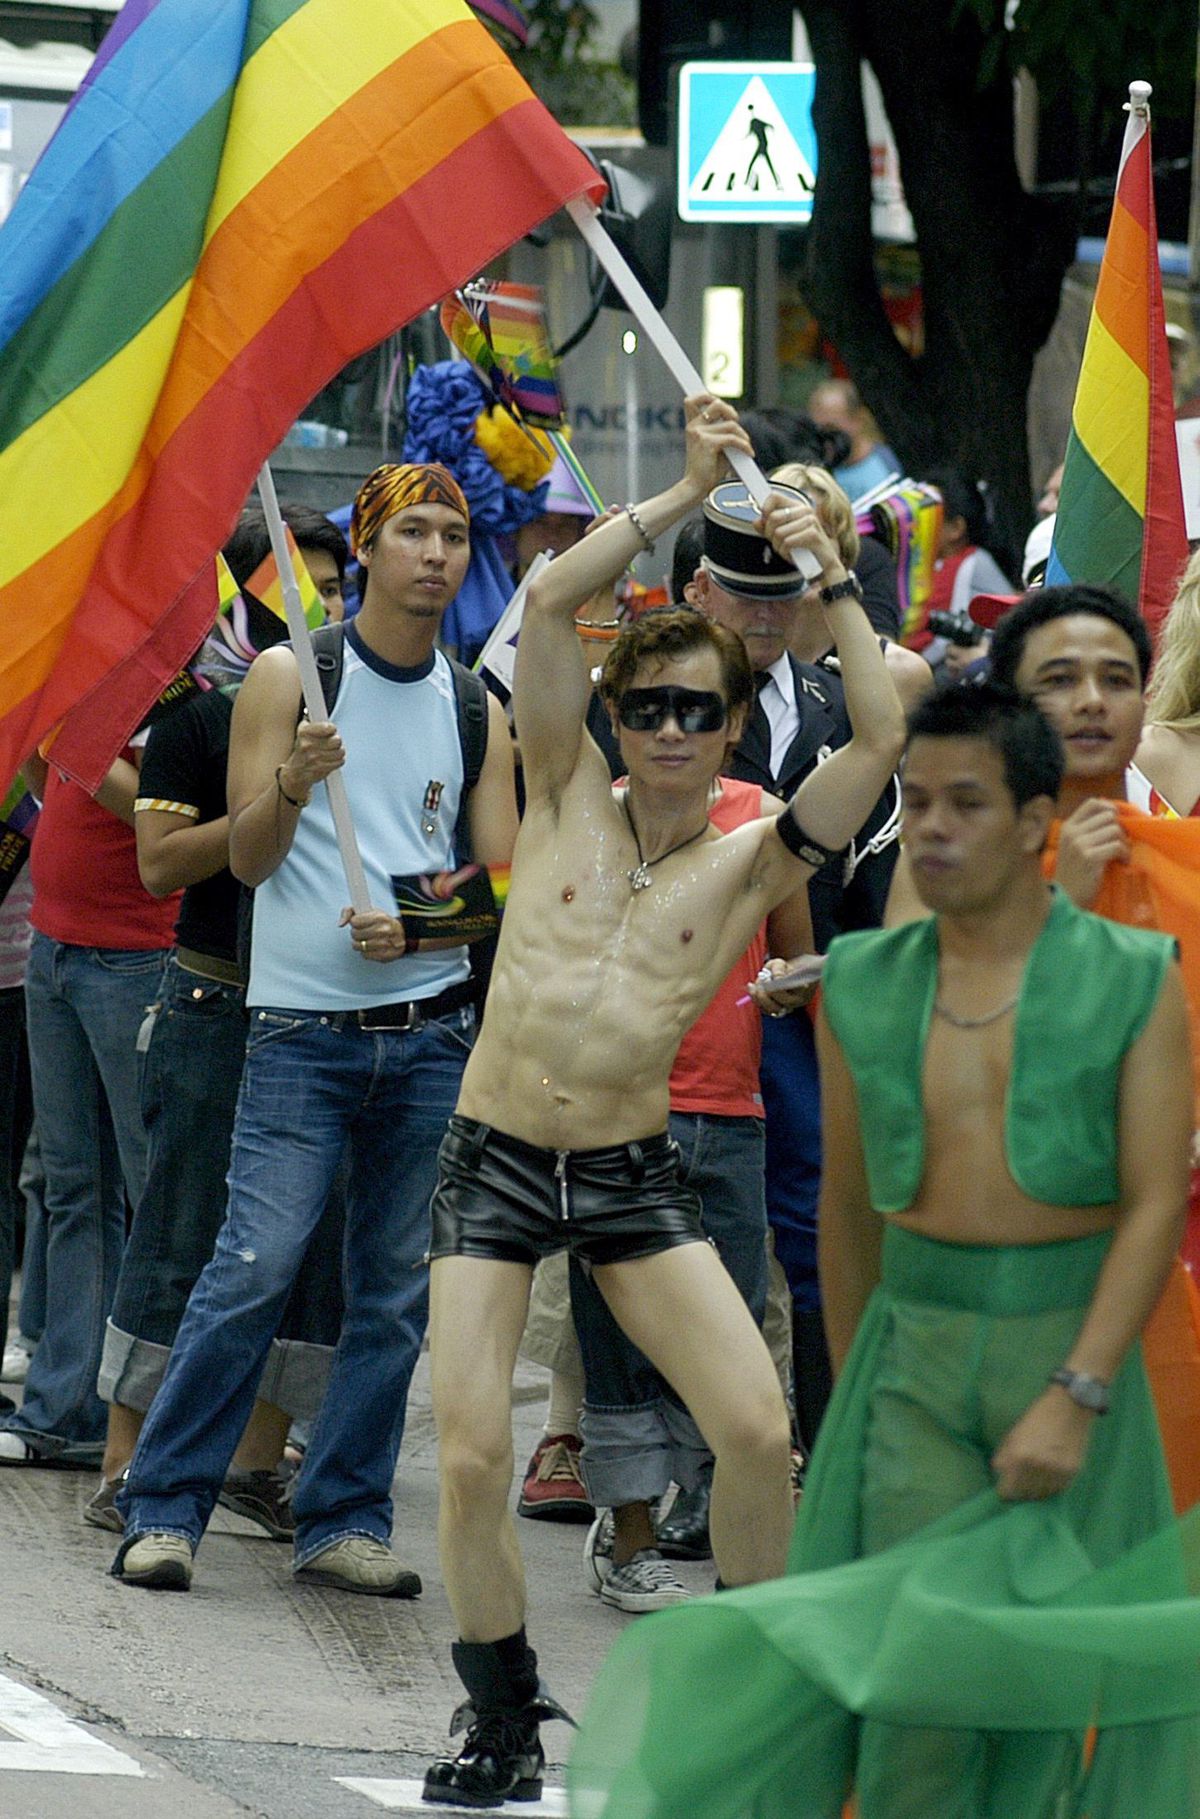 Bangkok To Hold First Gay Pride Parade In 11 Years - INFORMATION NIGERIA